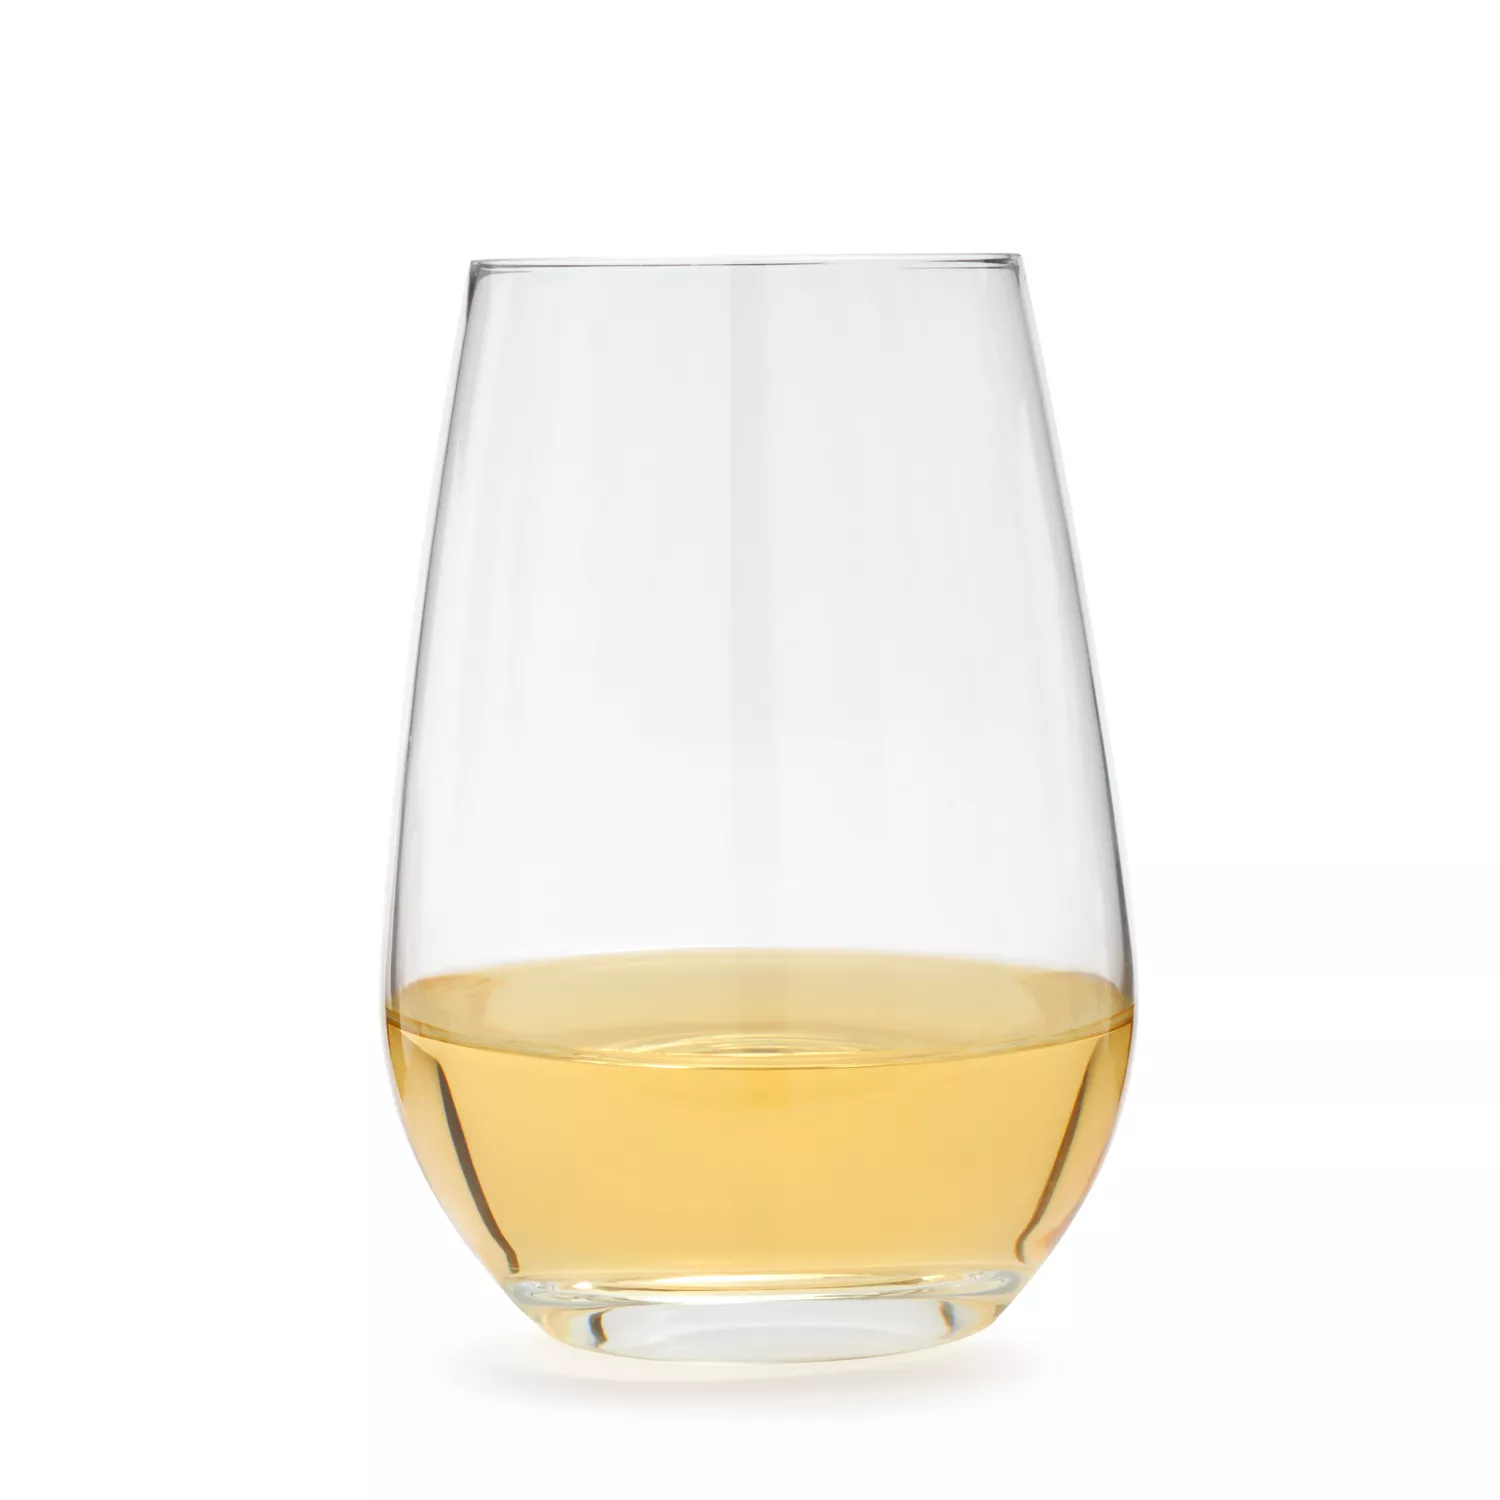 Schott Zwiesel Forte 13 oz. Stemless Wine Glass / Tumbler by